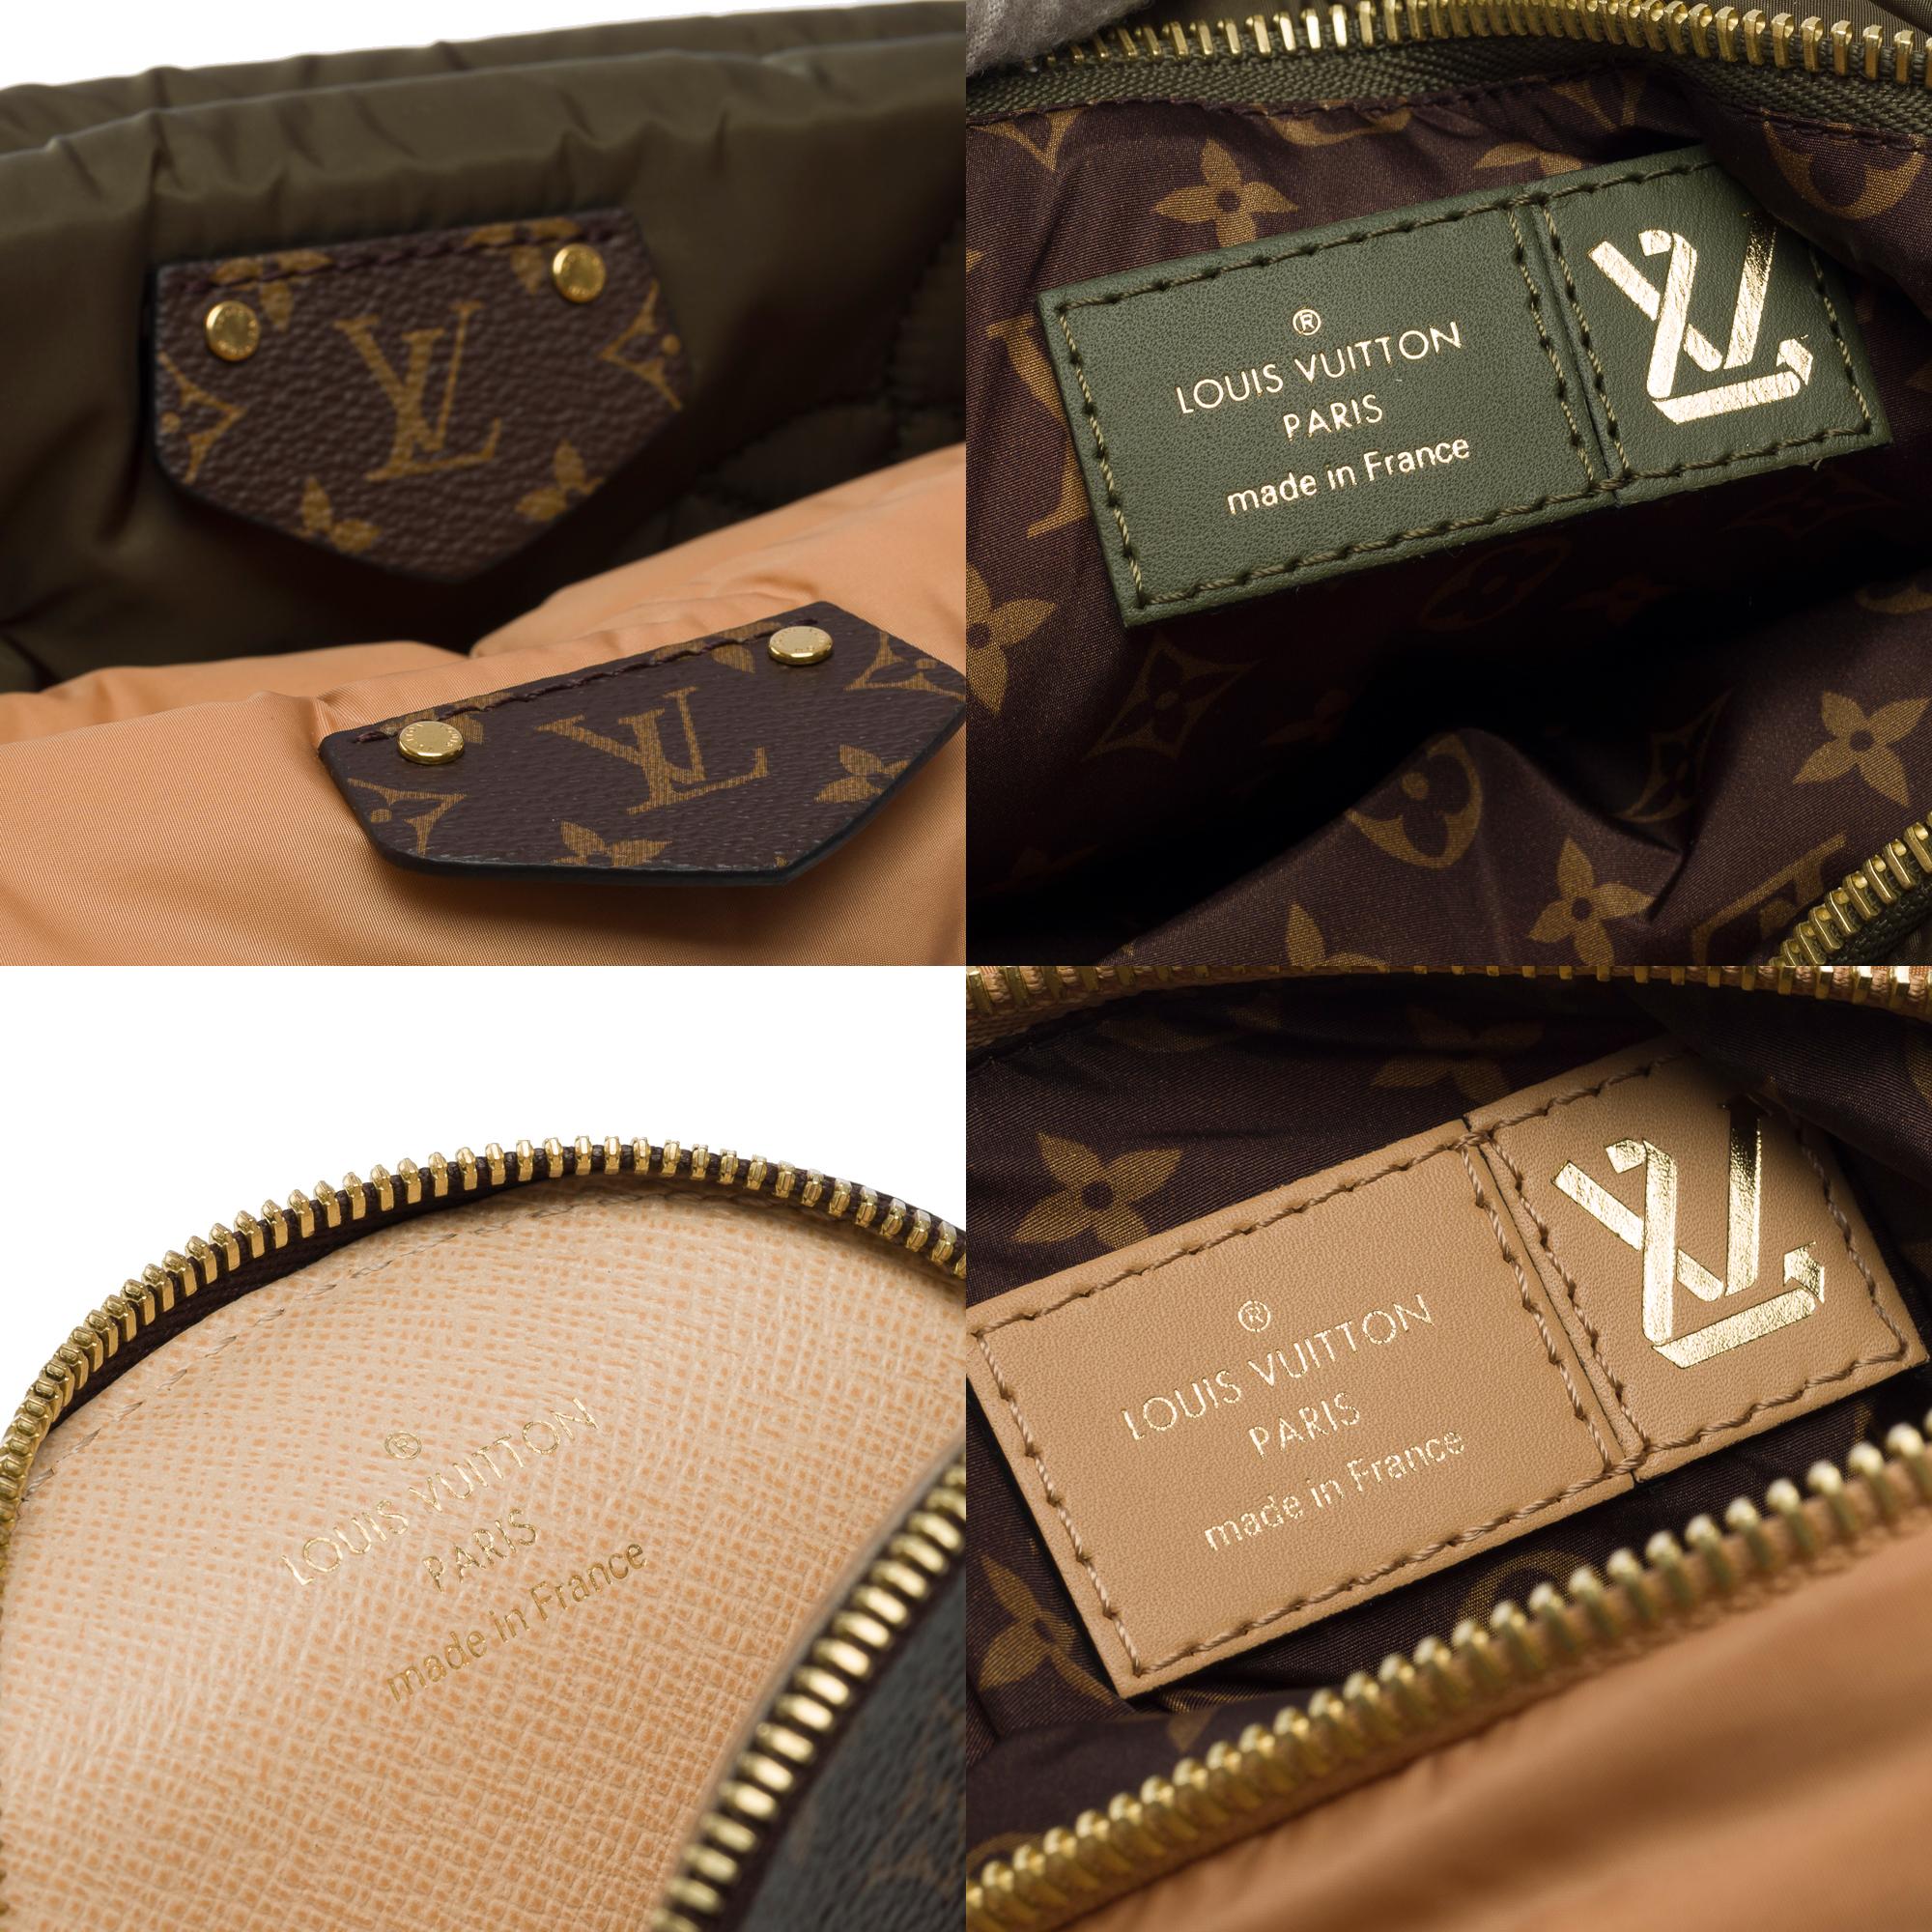 New Louis Vuitton Pillow Maxi Pochette shoulder bag in khaki/Beige nylon, GHW For Sale 3